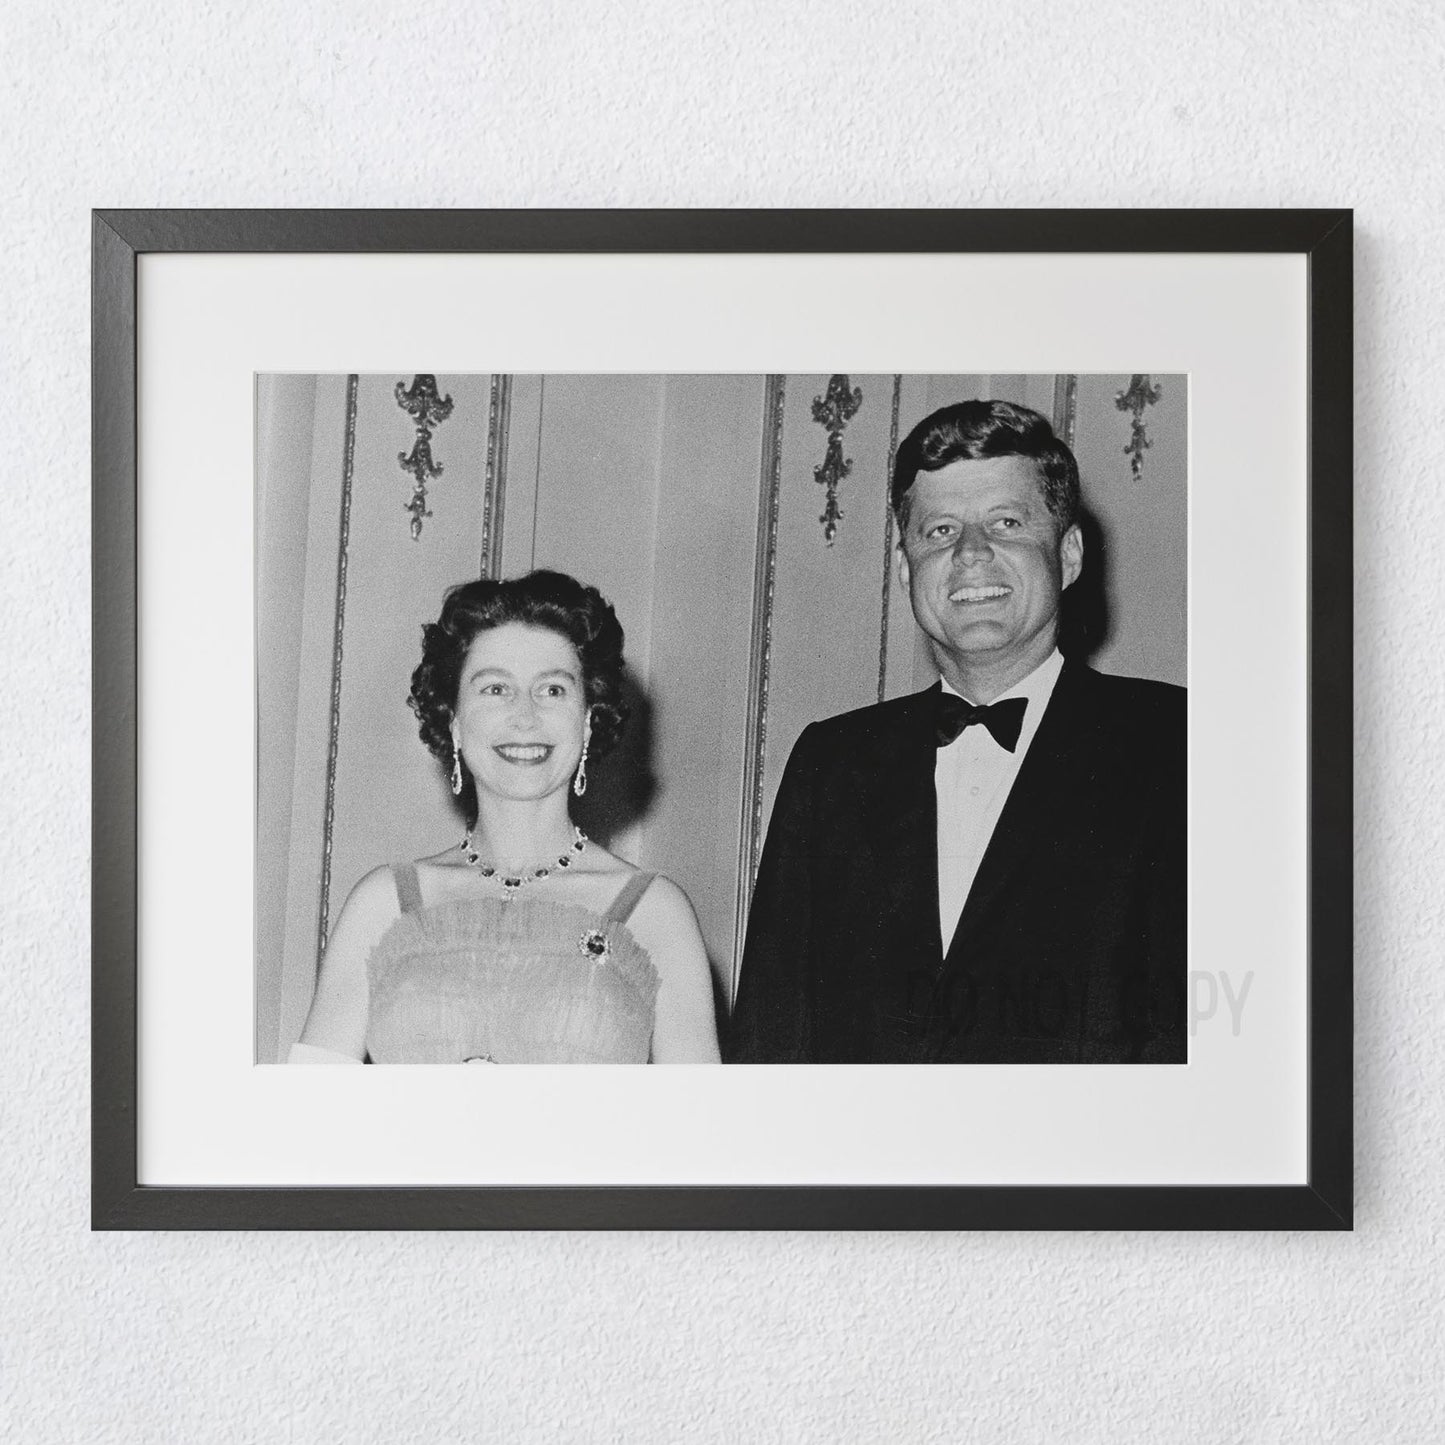 John F Kennedy (JFK) and Queen Elizabeth